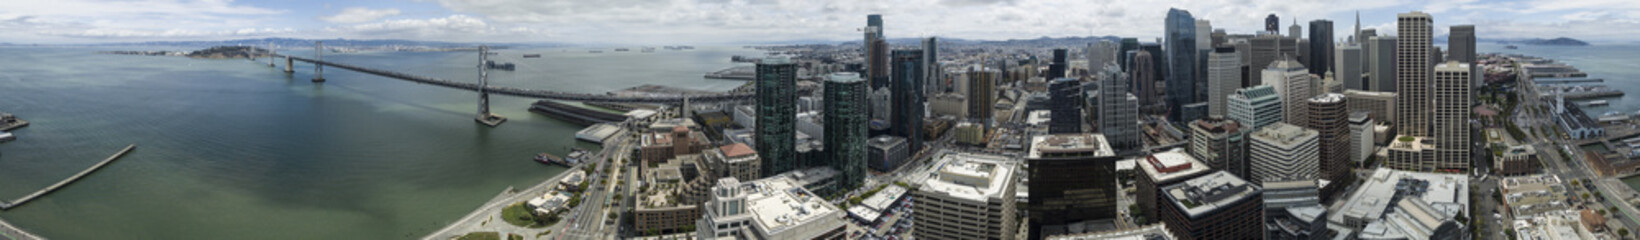 San Francisco, CA Bay Bridge Drone 360 Degree Panorama - High Resolution